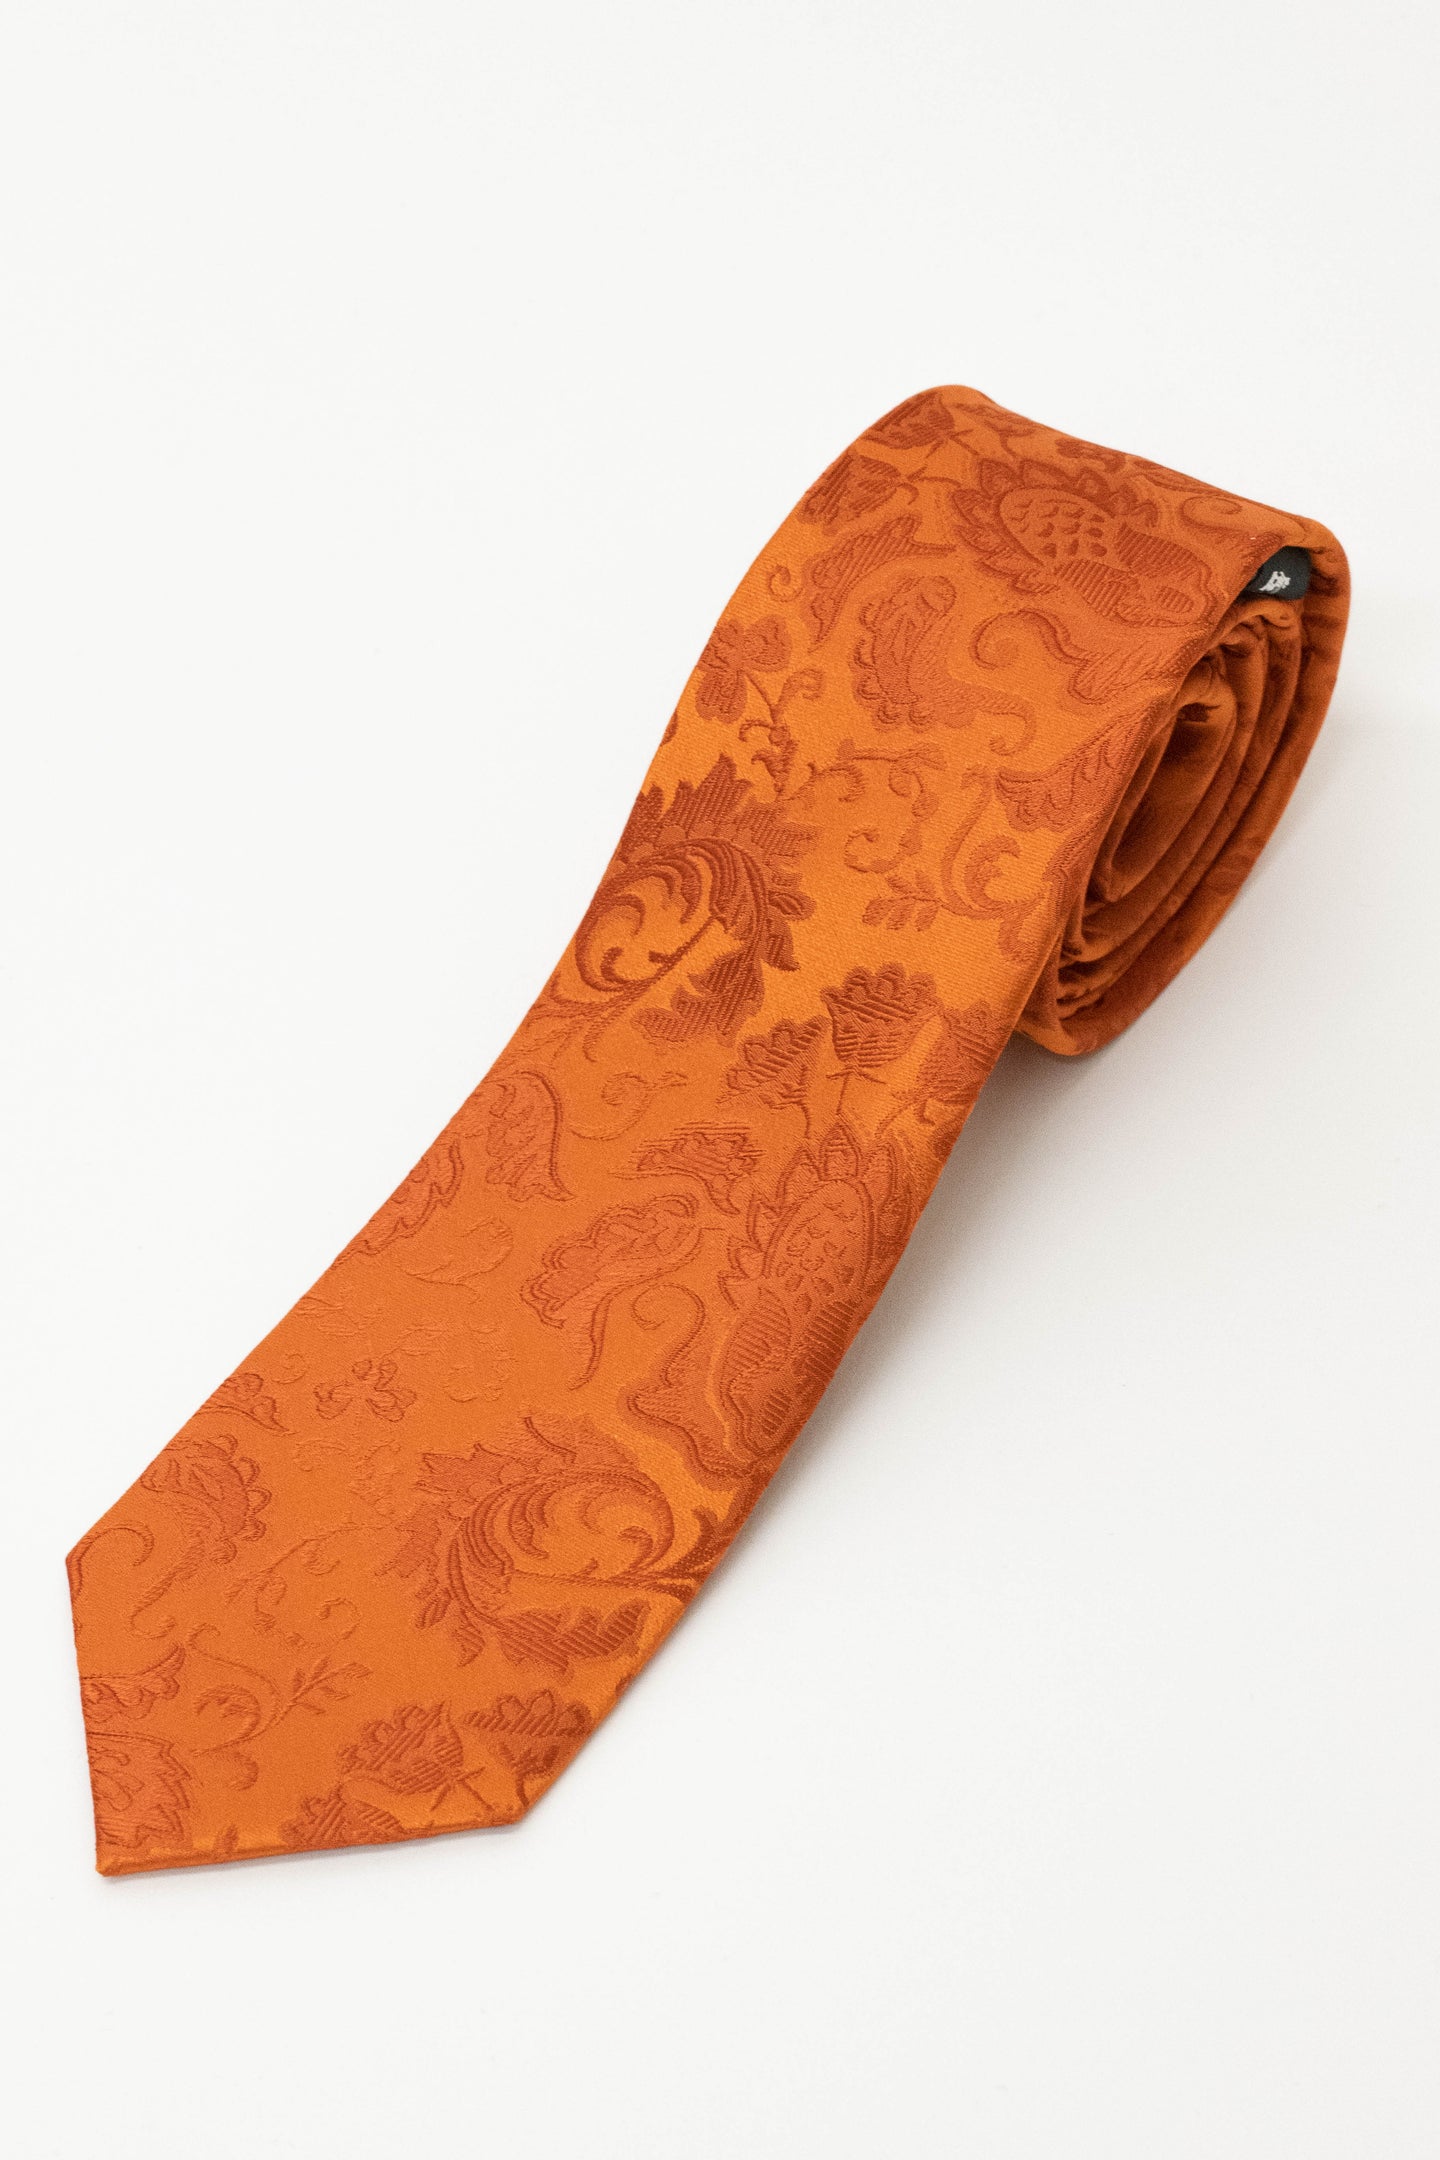 Knightsbridge Neckwear Orange Floral Tie Orange Floral